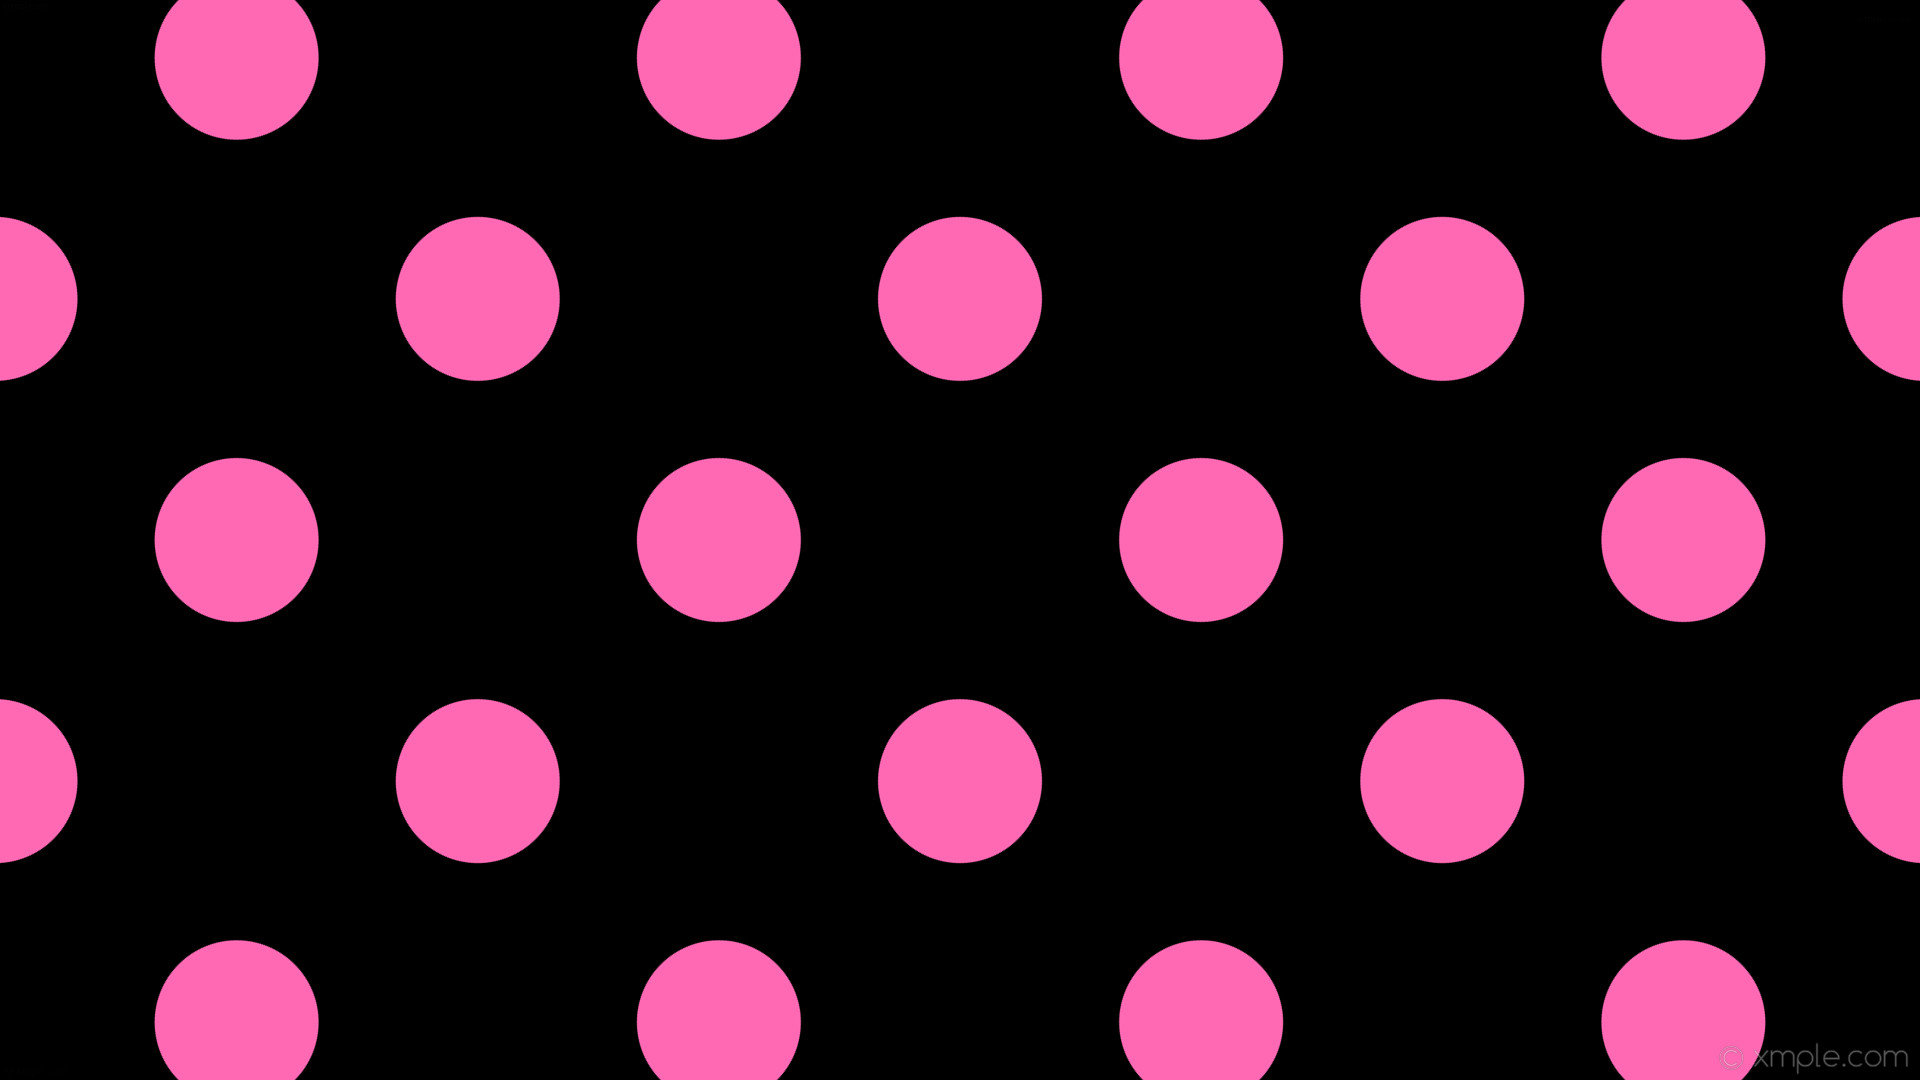 Wallpaper spots black pink polka dots hot pink #ff69b4 315 164px 341px